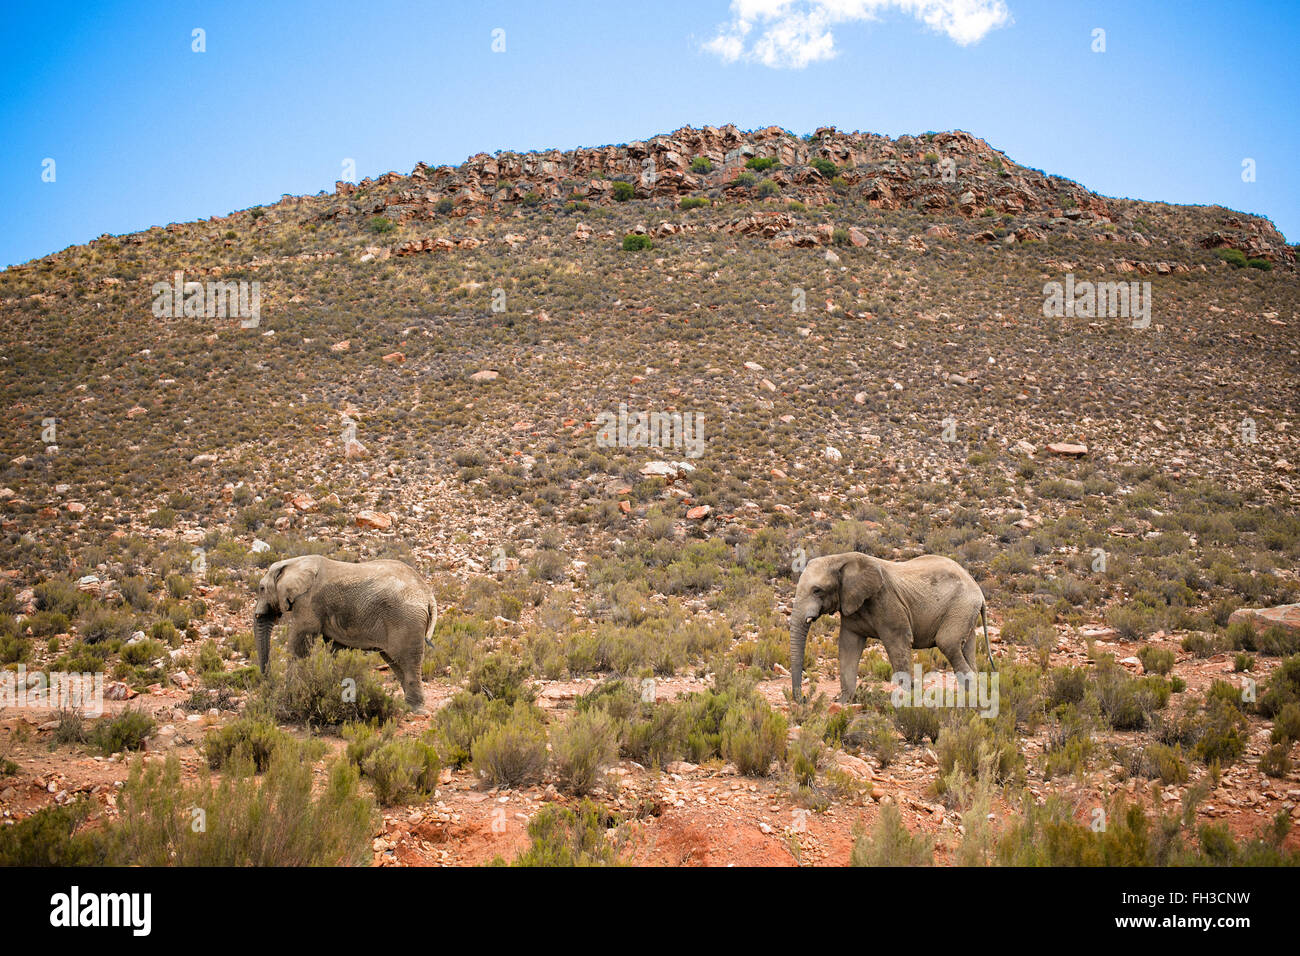 2 elephants in a Safari in Cape Town Stock Photo